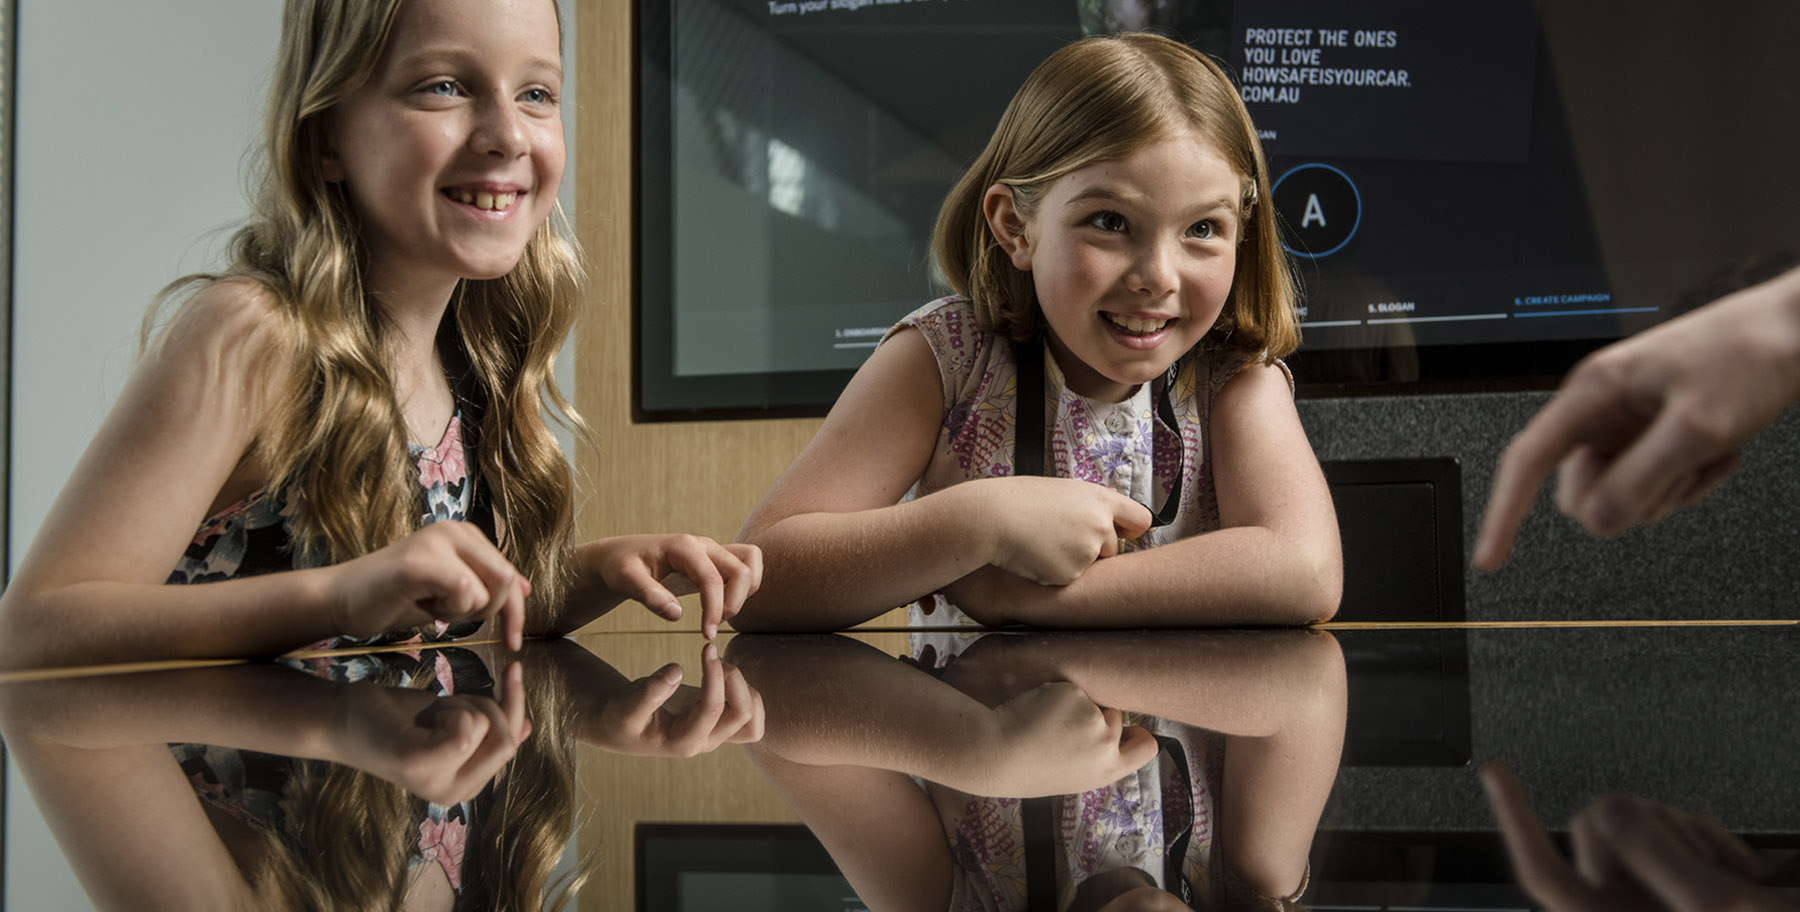 Two children sit at an interactive exhibit